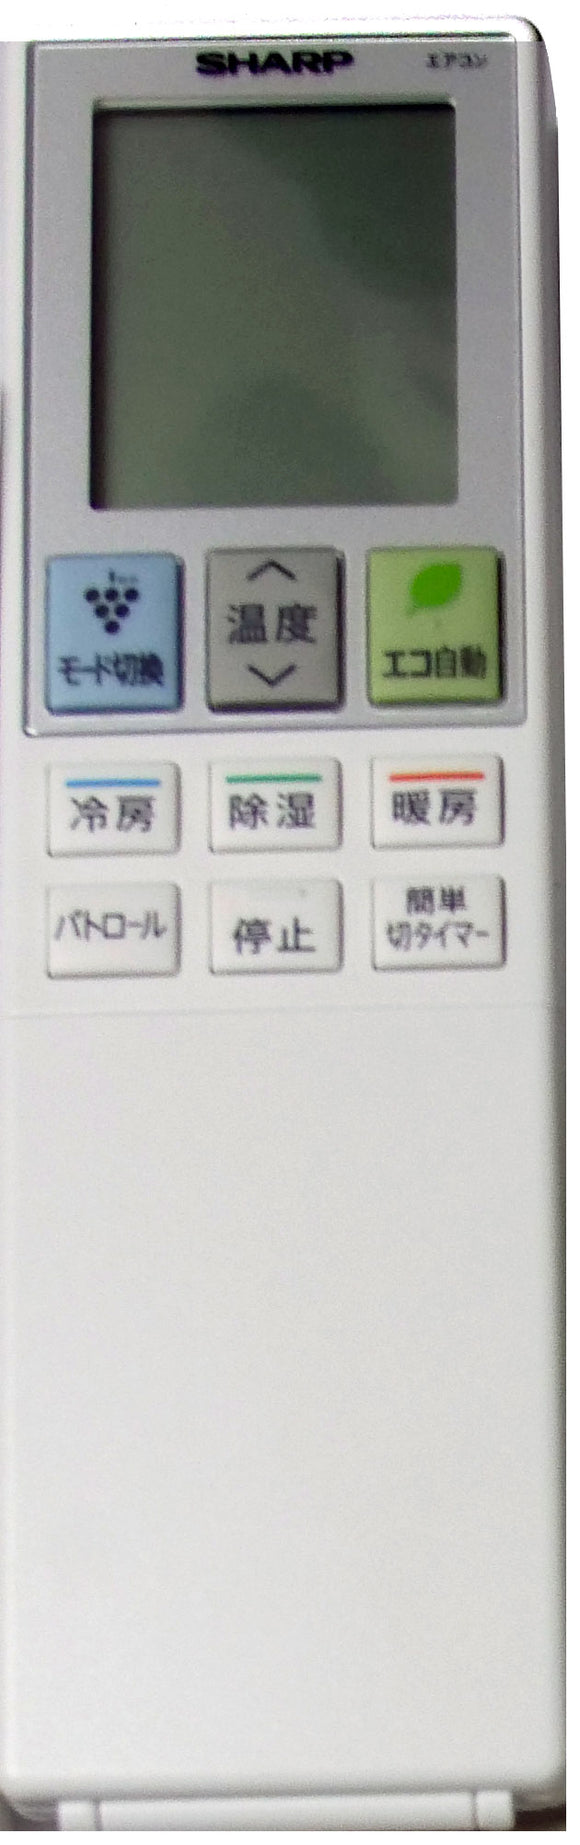 Sharp Aircond Remote